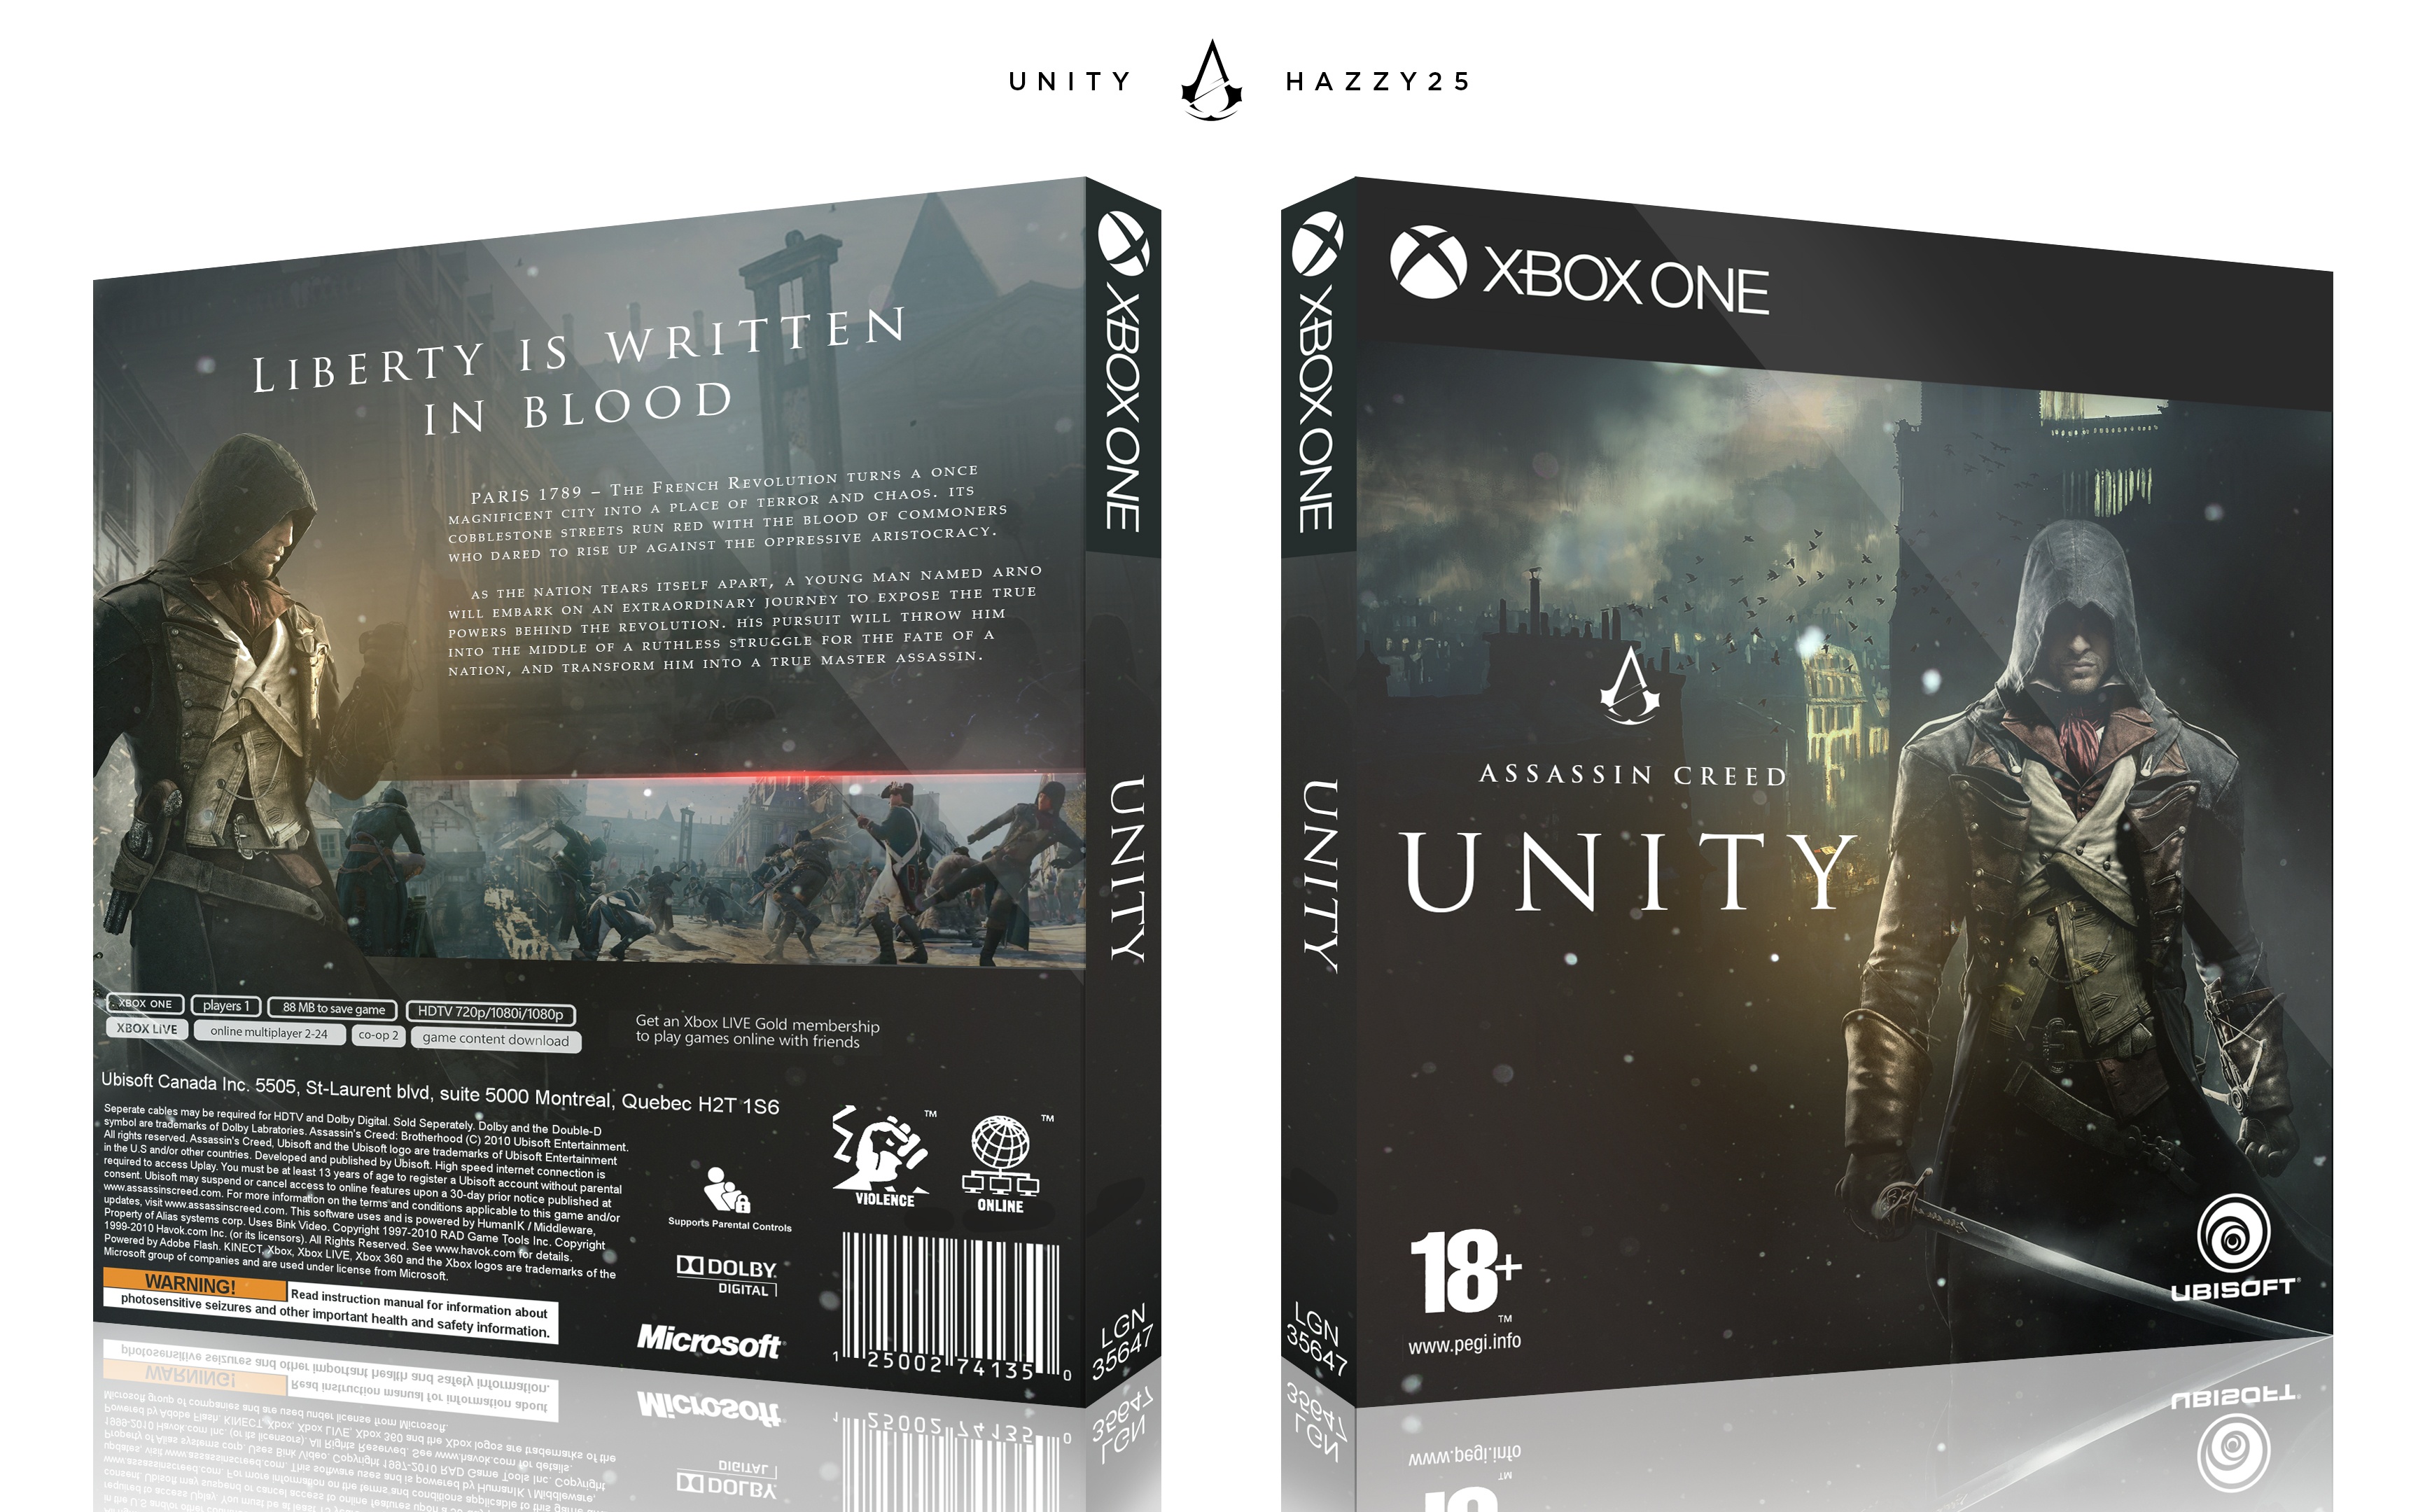 Assassin's Creed Unity box cover